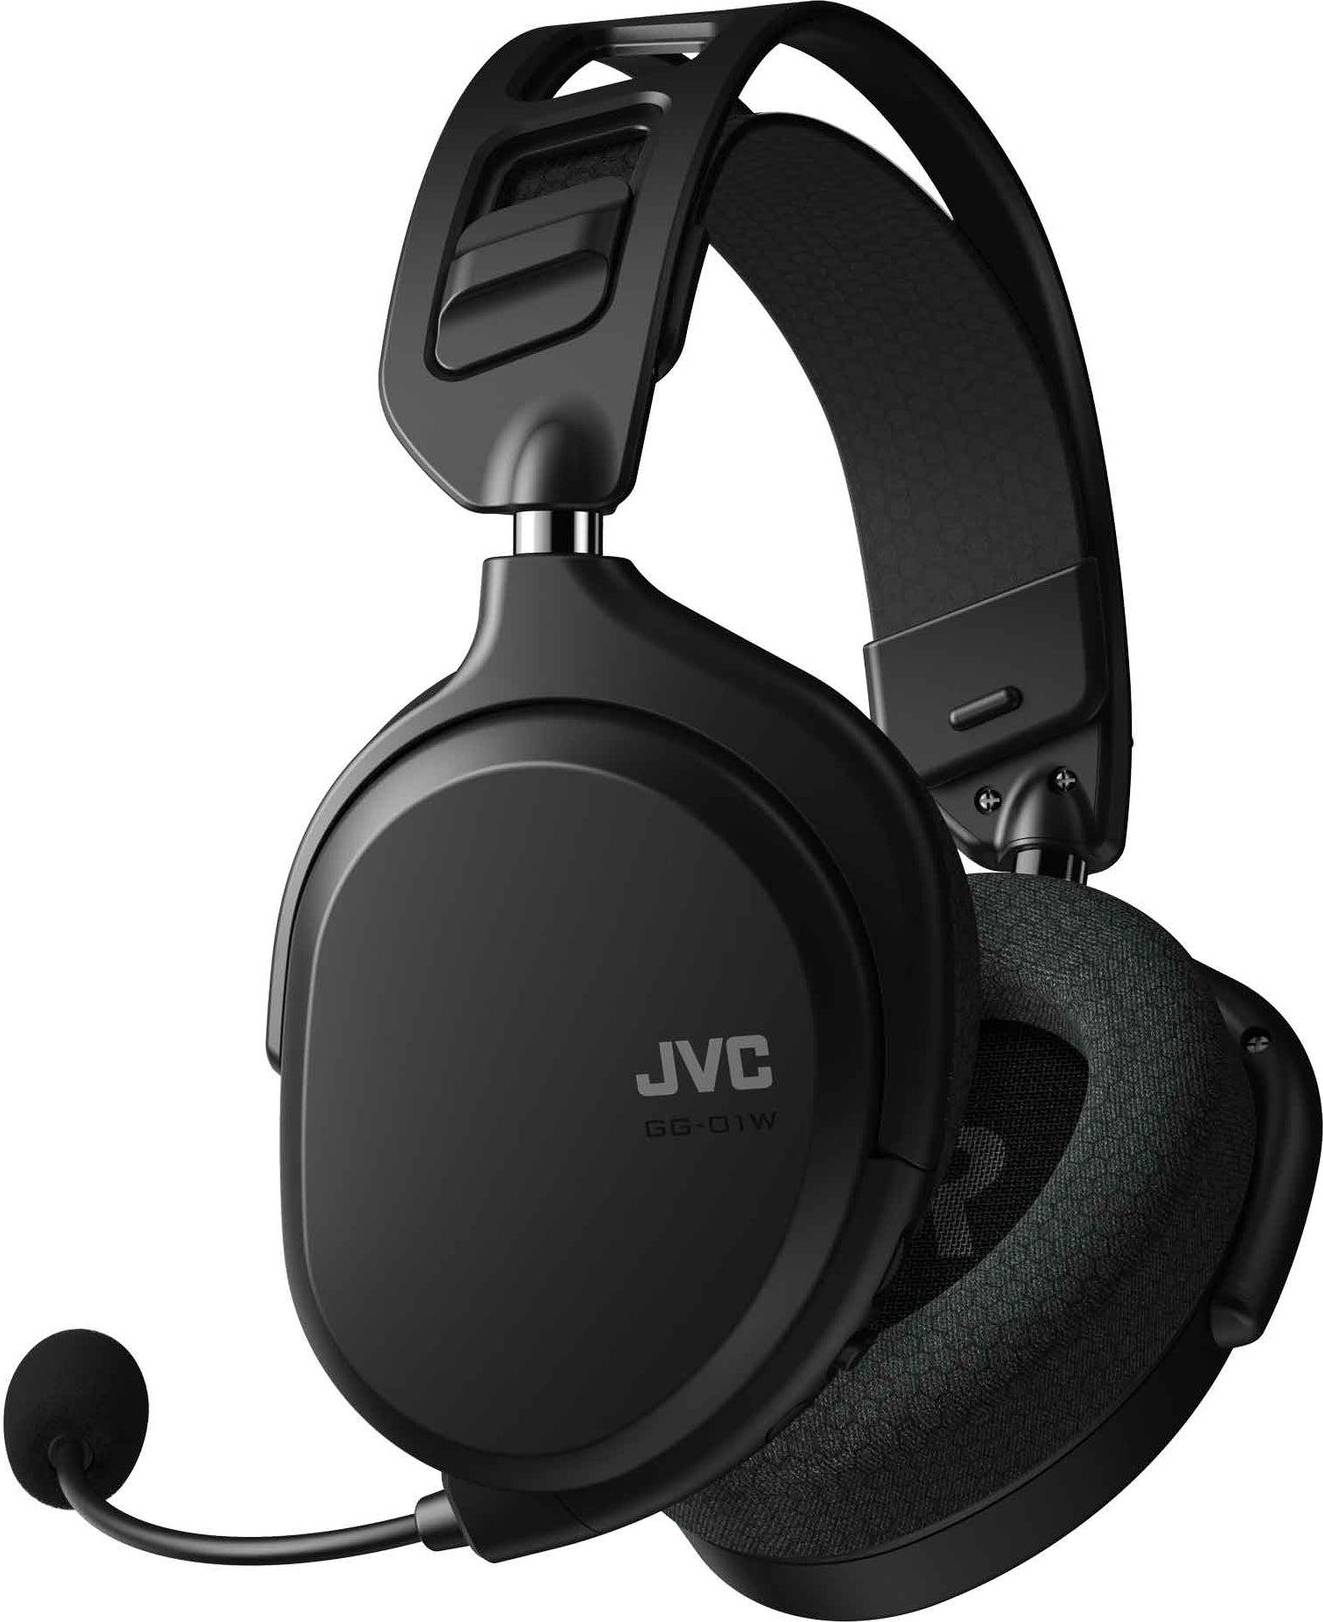  Bild på JVC GG-01WQ gaming headset